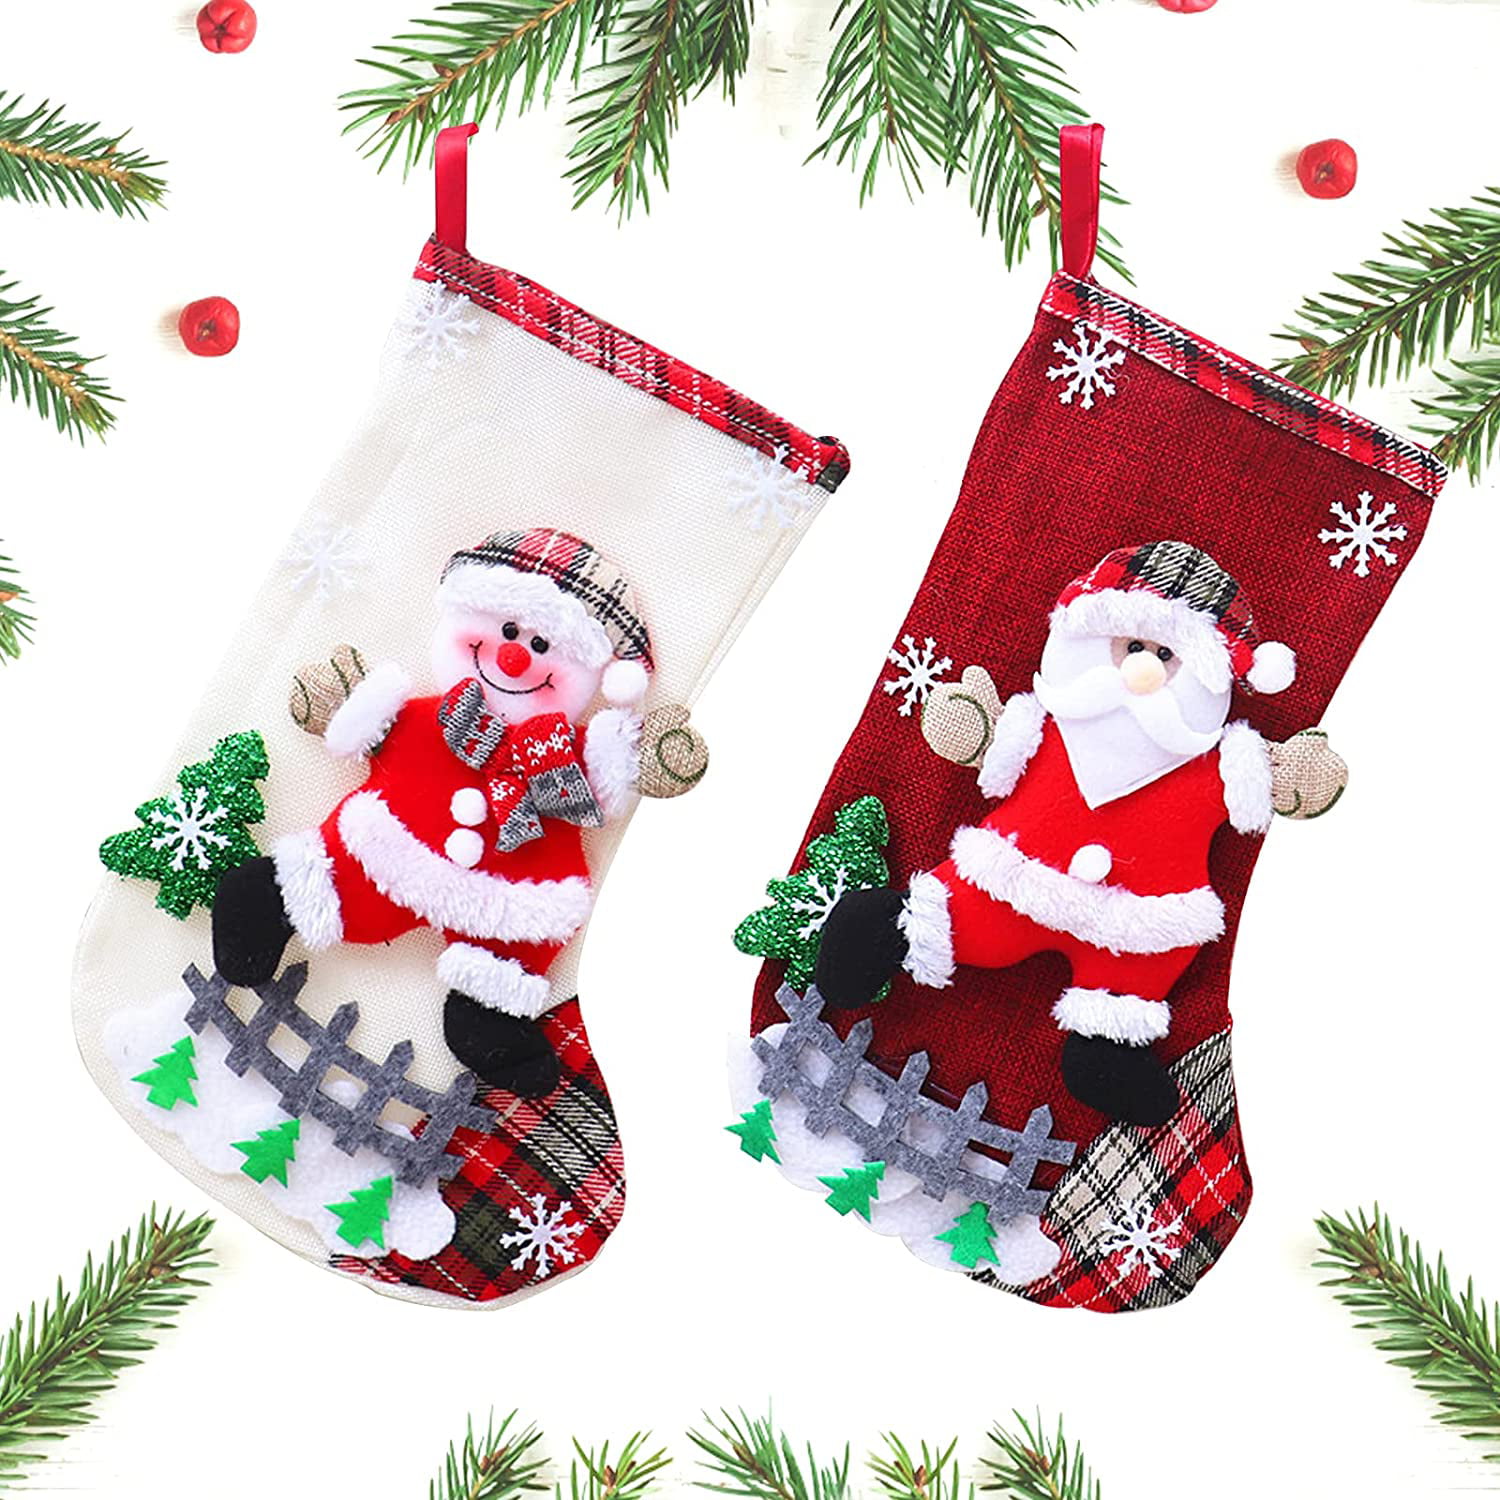 4 Christmas colouring crayons Santa Snowman Present Candy Xmas Stocking Fillers 